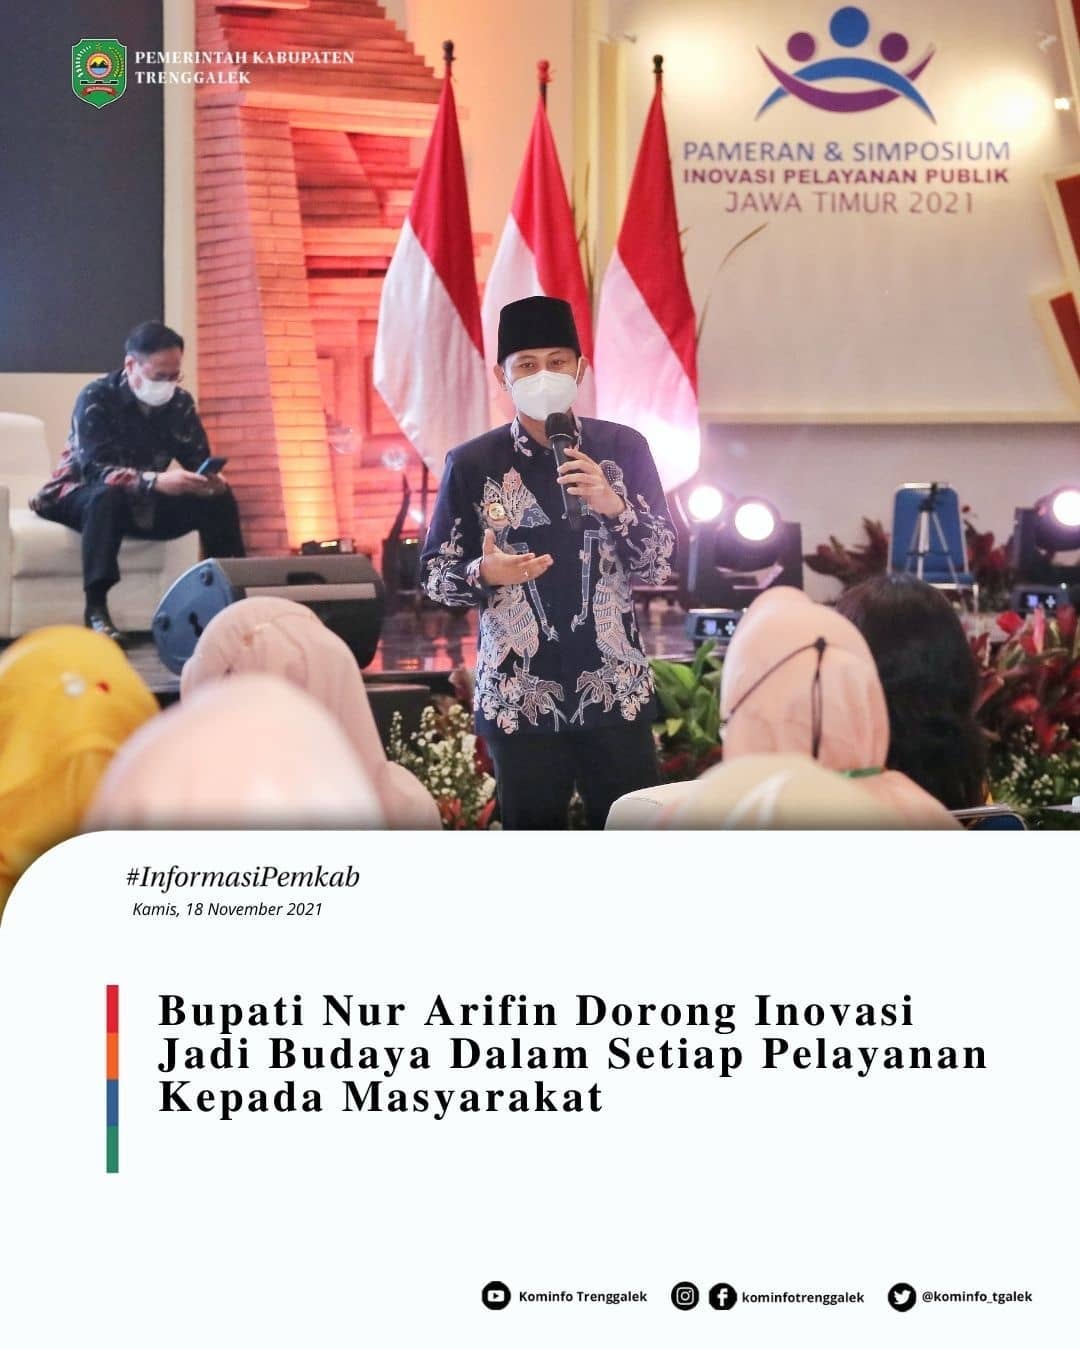 Bupati Nur Arifin Dorong Inovasi Jadi Budaya Dalam Setiap Pelayanan Kepada Masyarakat